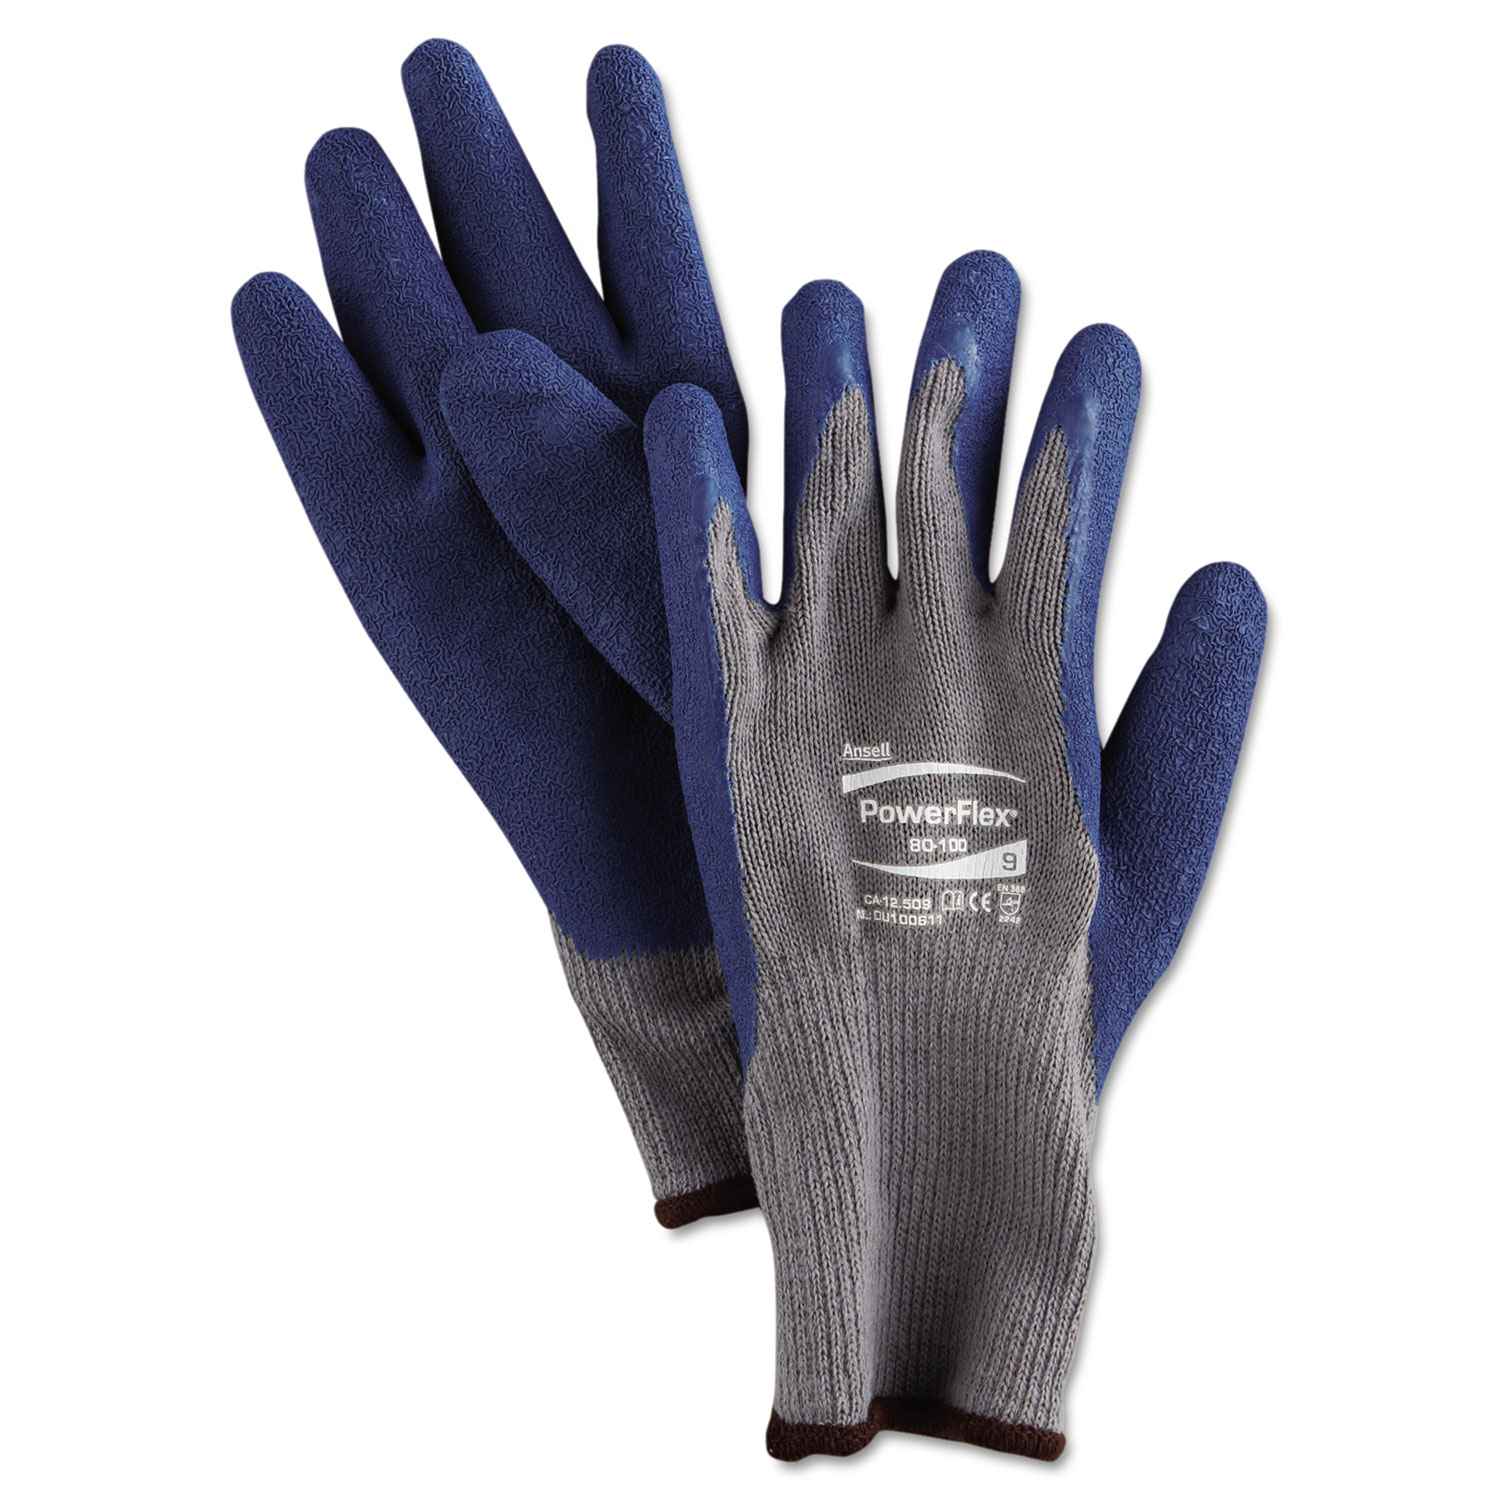  AnsellPro 103499 PowerFlex Gloves, Blue/Gray, Size 9, 1 Pair (ANS801009PR) 